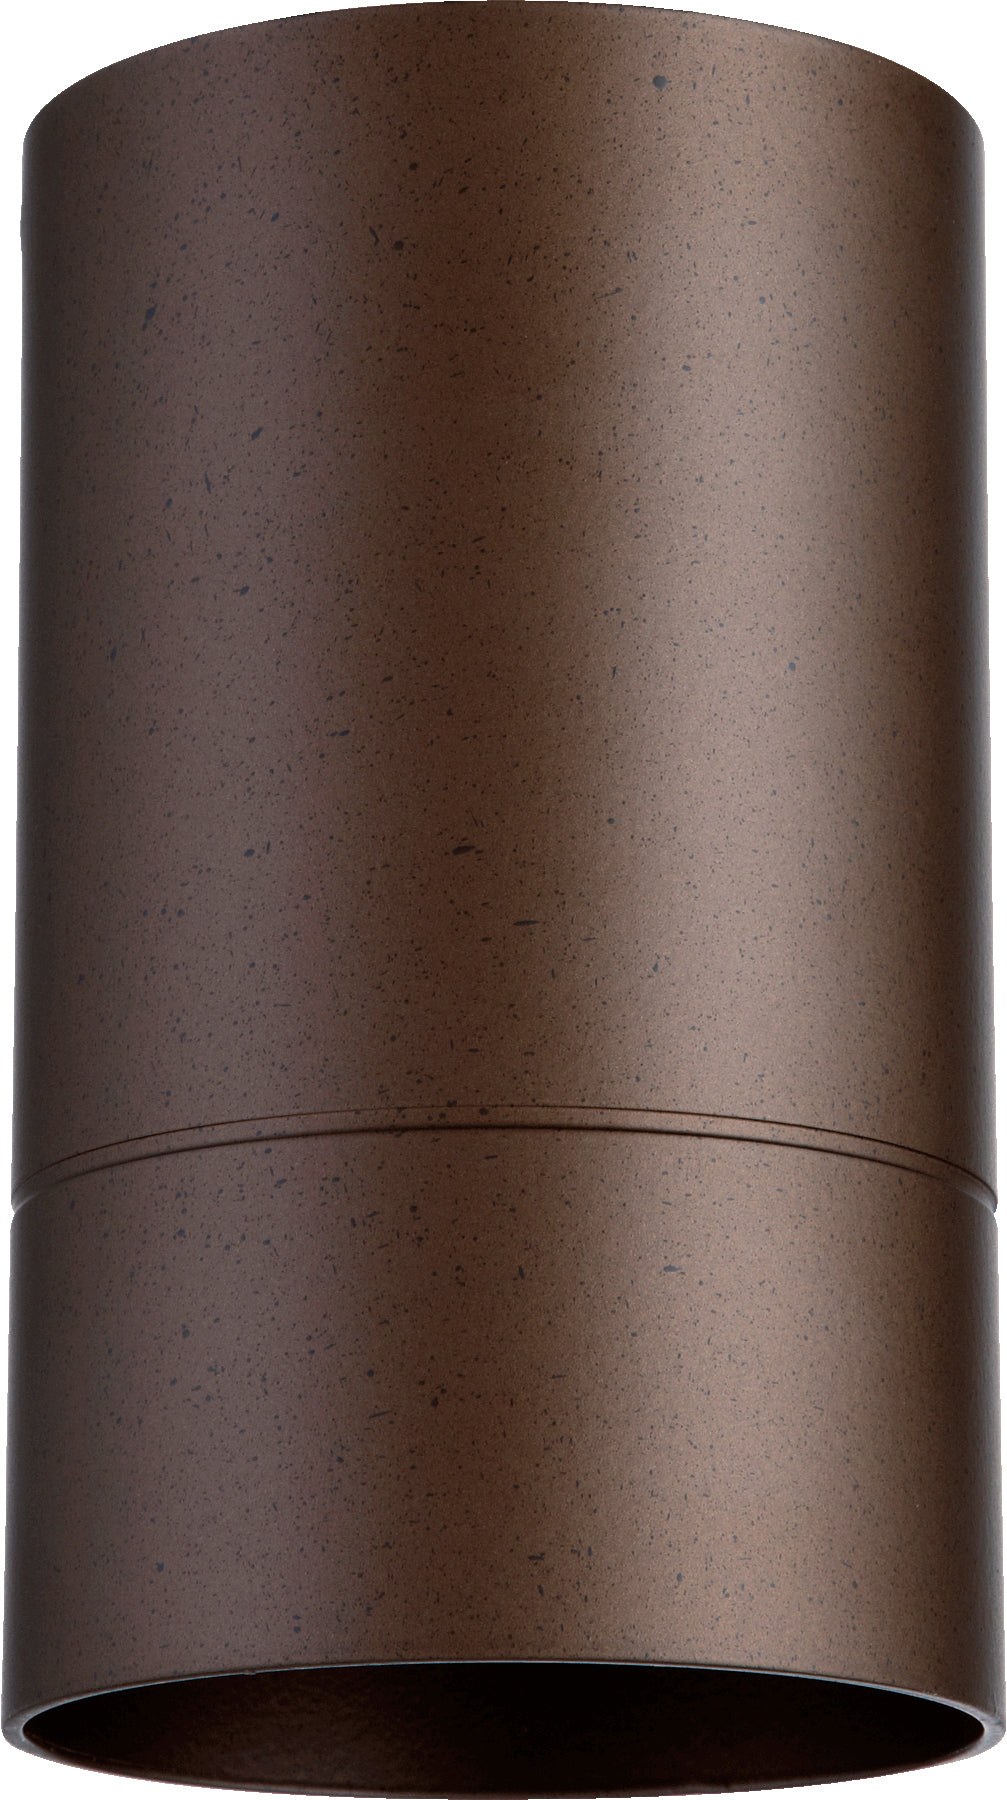 Quorum Cylinder 320-86 Ceiling Mount - Oiled Bronze